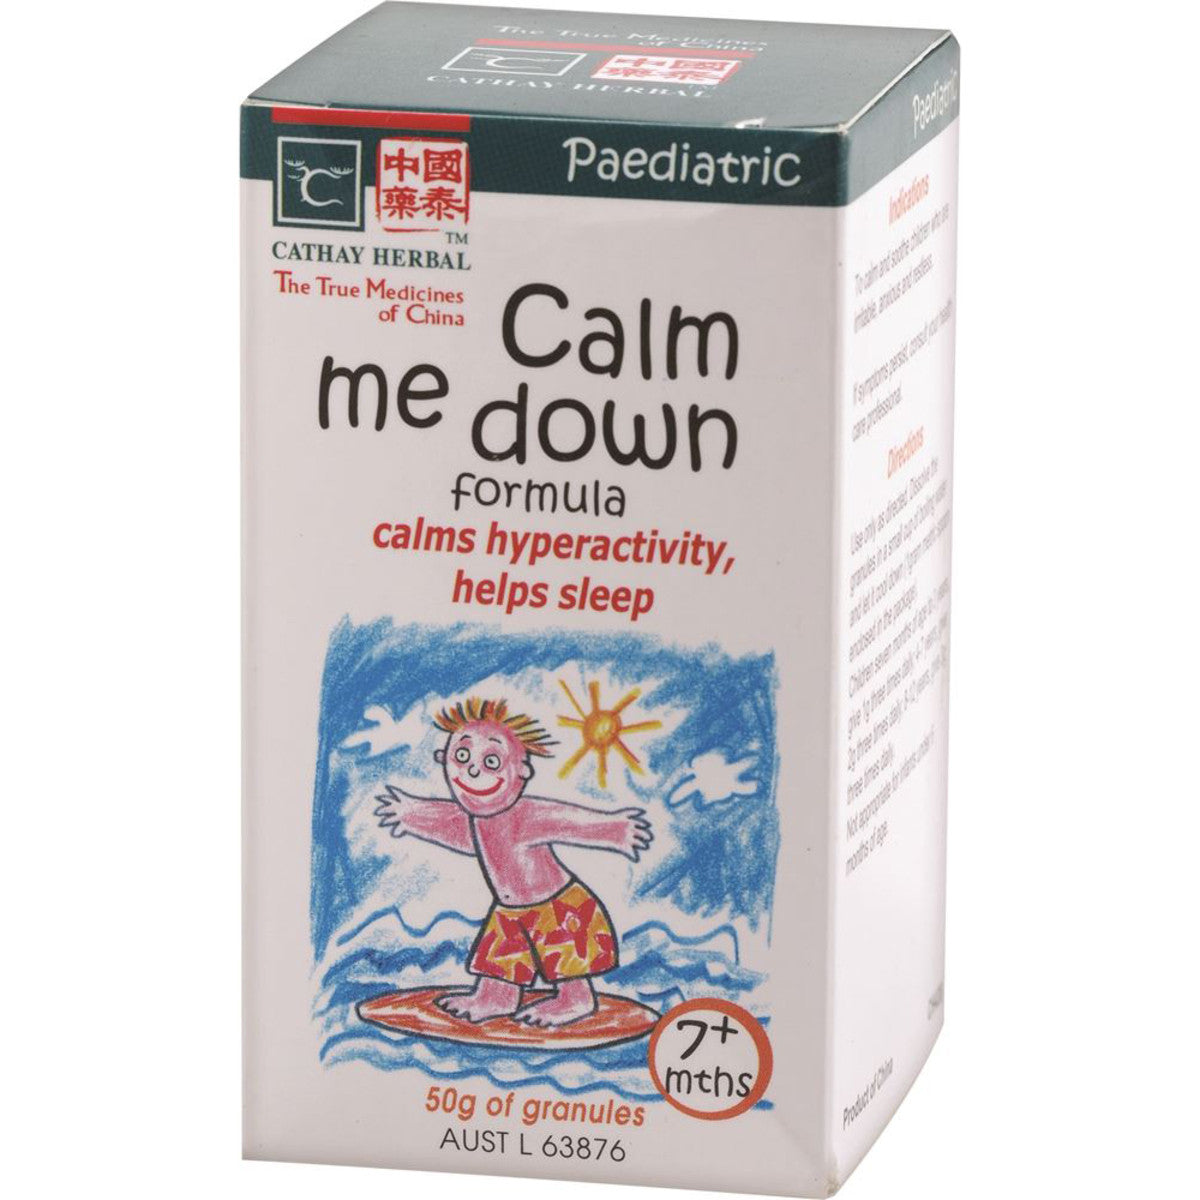 Cathay Herbal - Paediatric Calm Me Down Formula